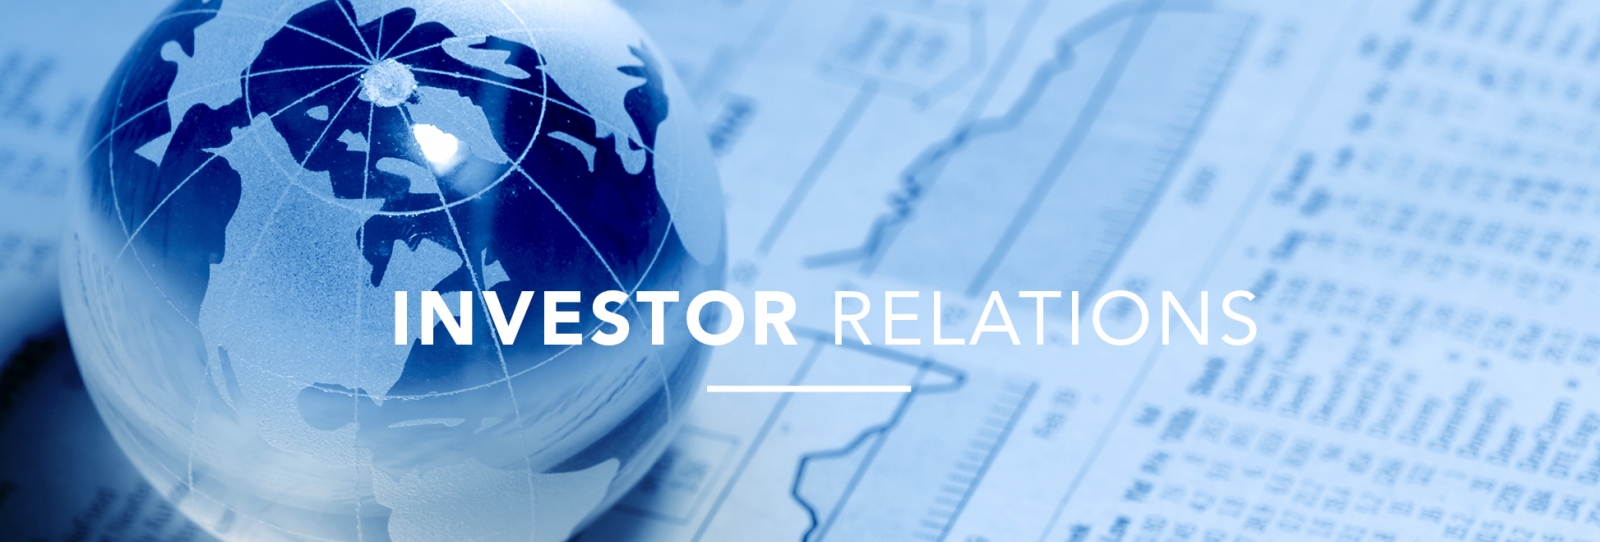 Investor relations